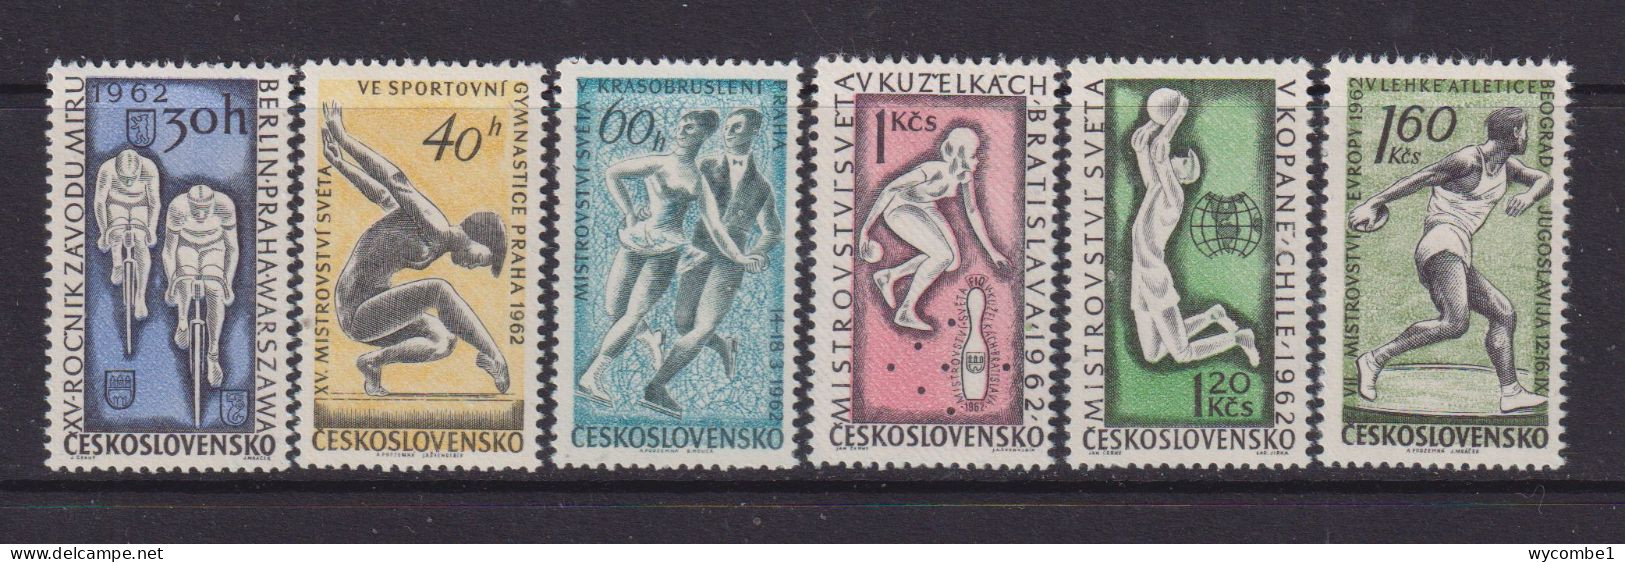 CZECHOSLOVAKIA  - 1962 Sports Events Set Never Hinged Mint - Ongebruikt